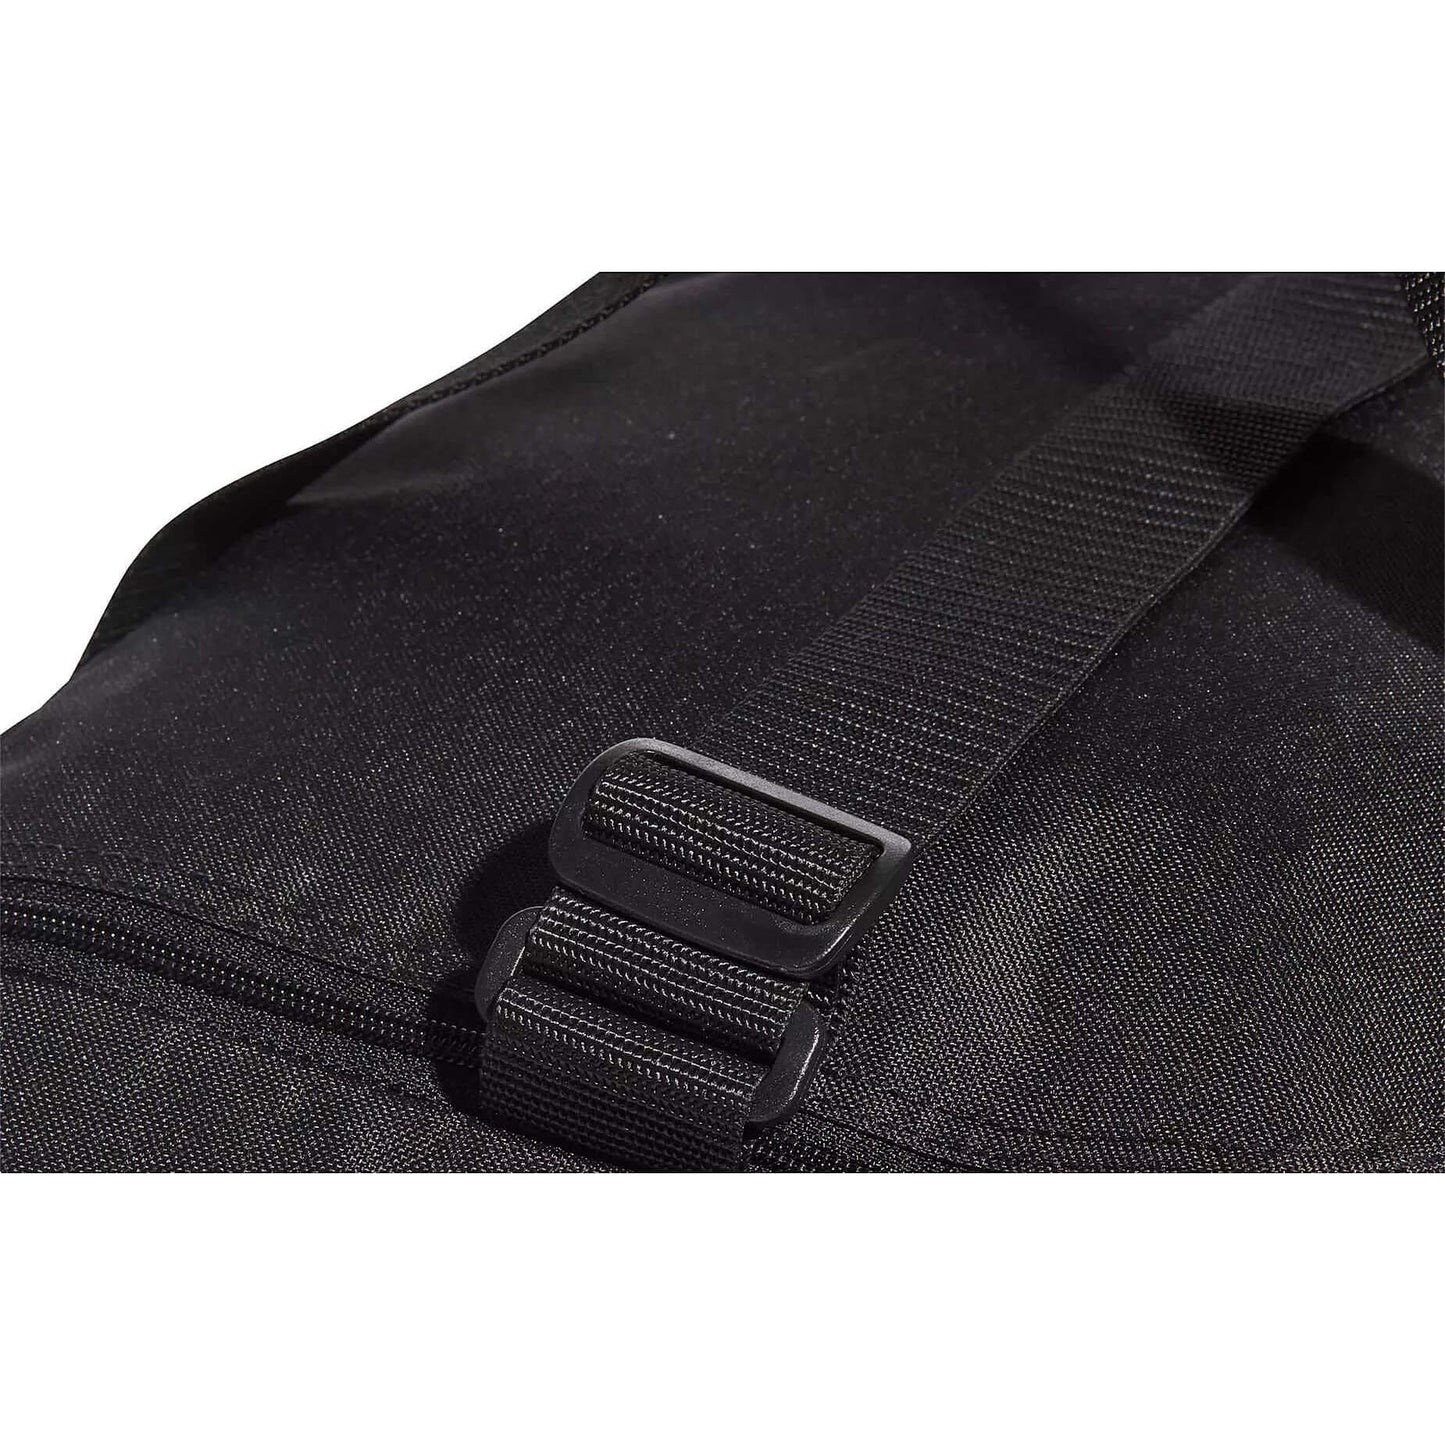 Adidas Tiro Duffel Bag - Medium - Black - 58 cm x 30 cm x 29 cm